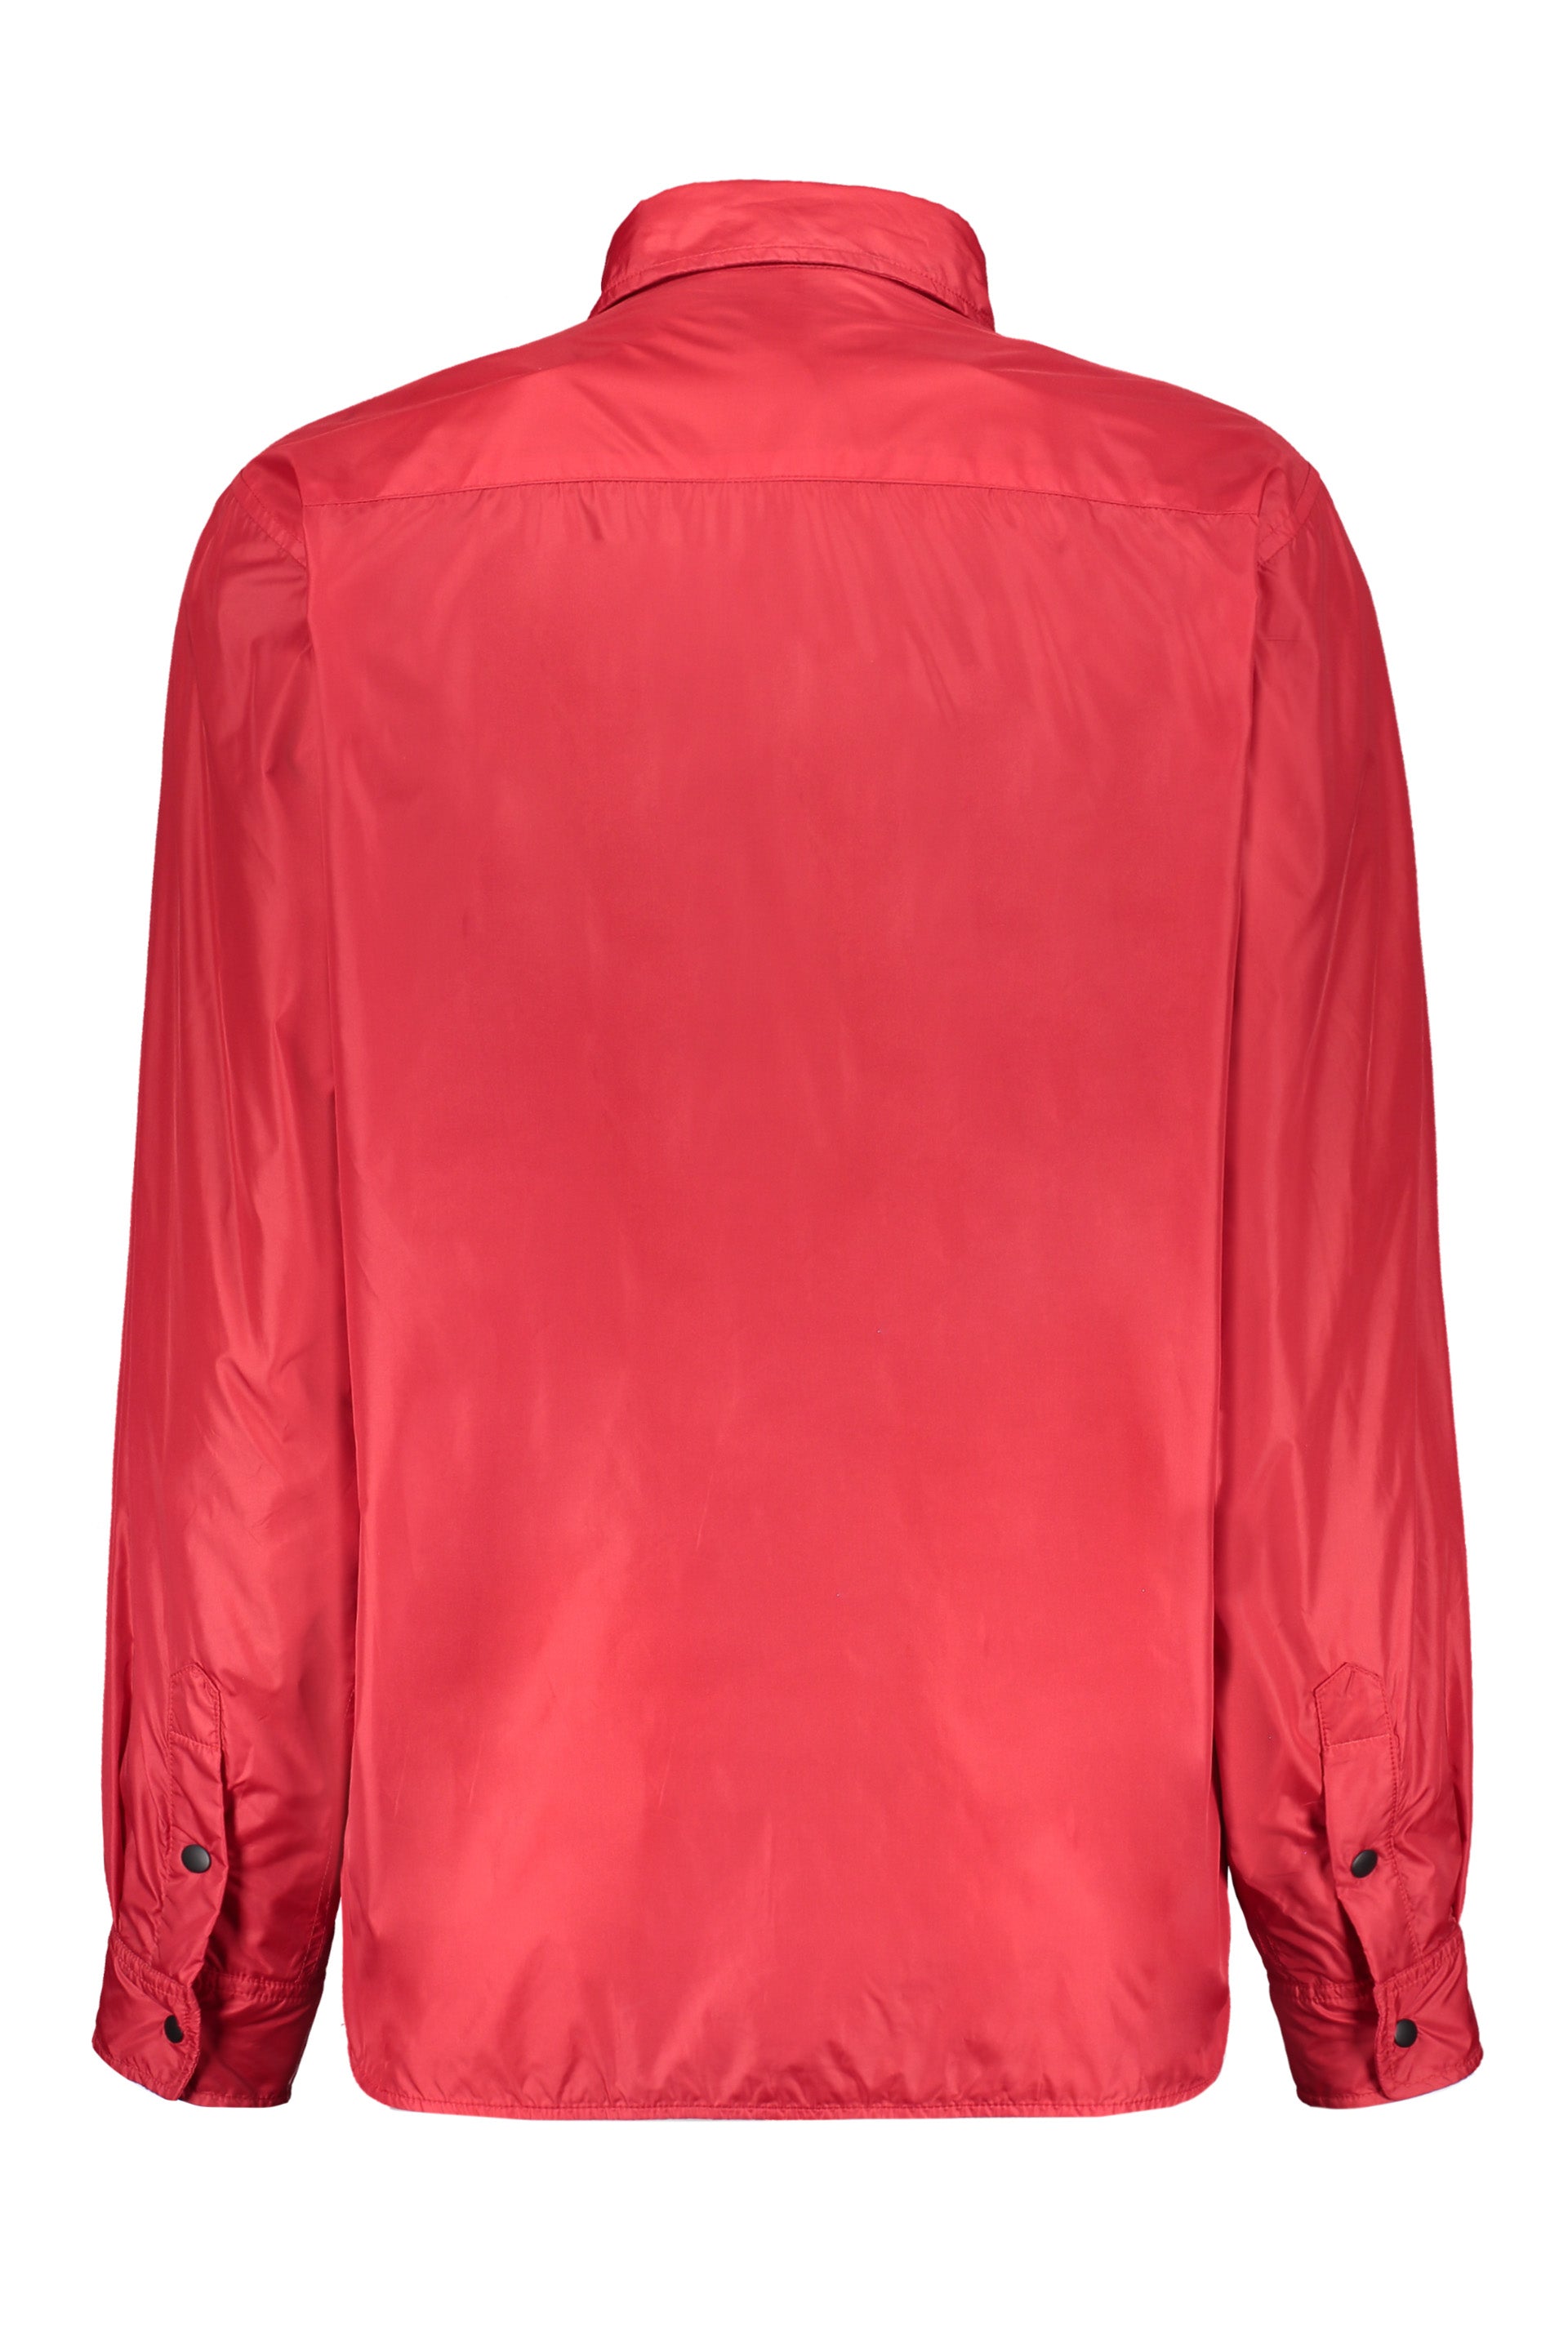 Aspesi-OUTLET-SALE-Techno-fabric-jacket-Jacken-Mantel-16-ARCHIVE-COLLECTION-2.jpg